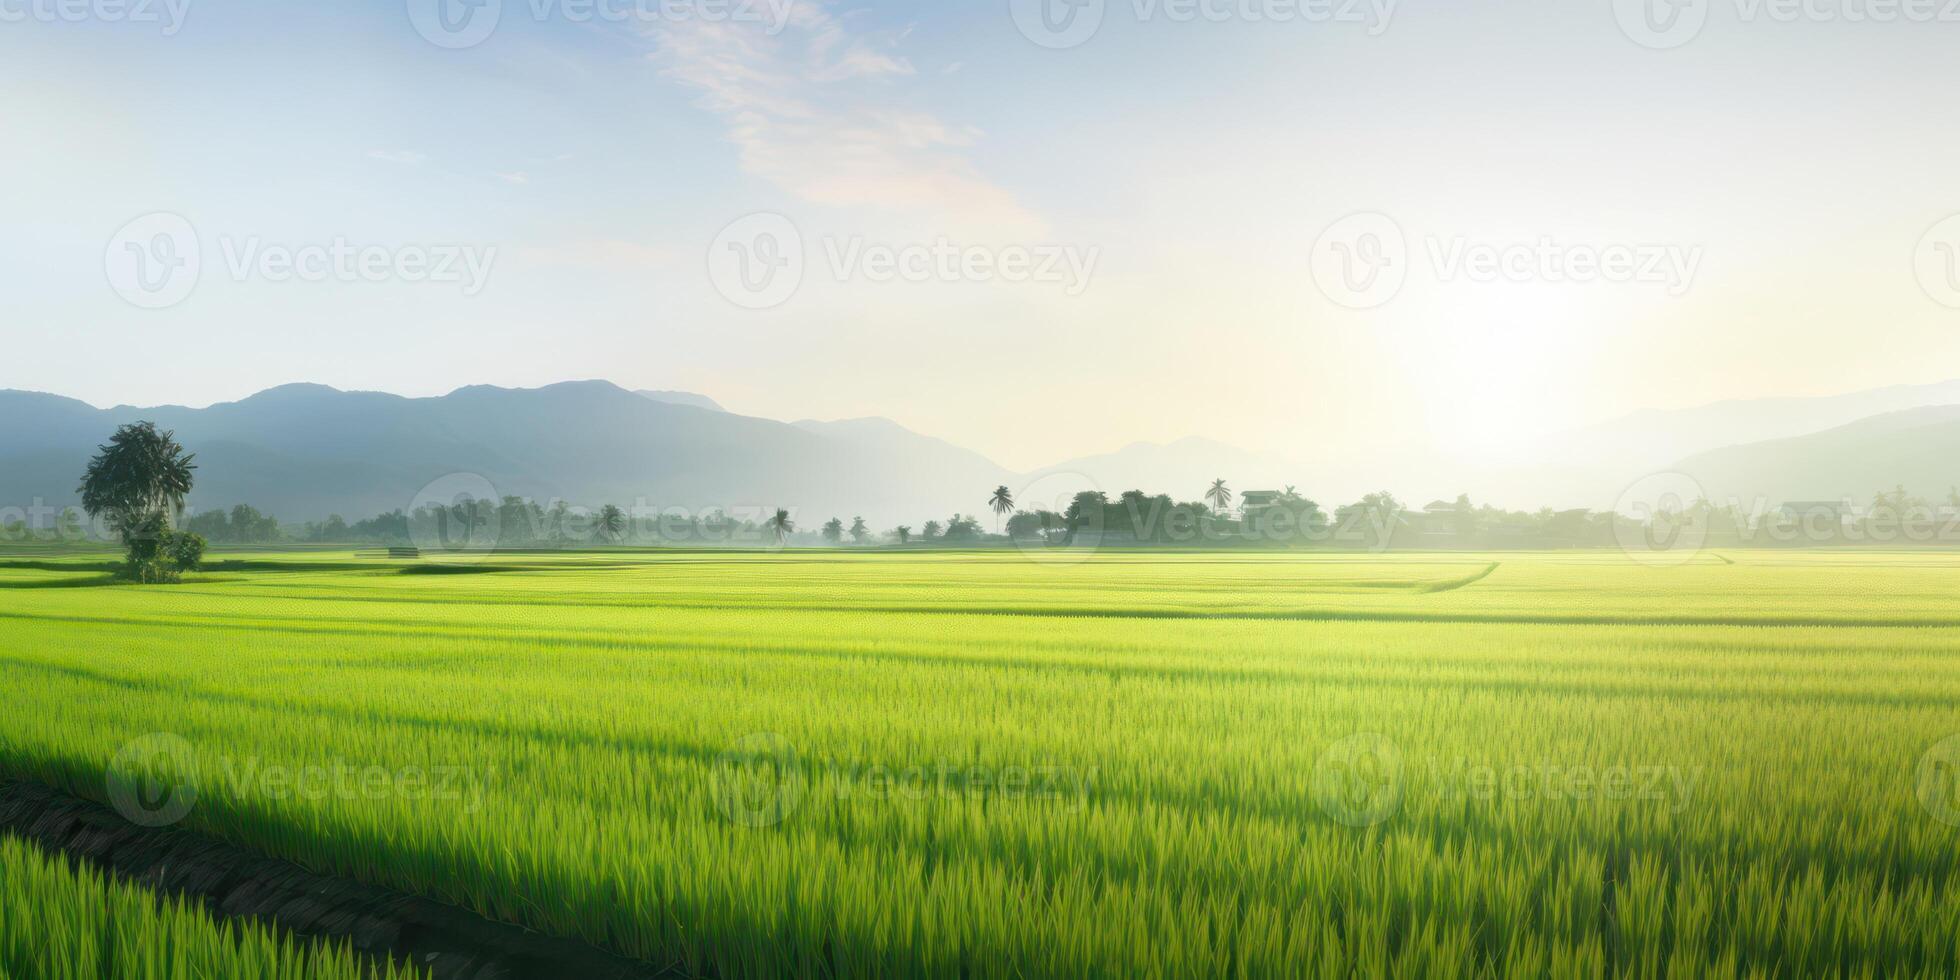 AI generated Morning View of a Flourishing Rice Farm photo